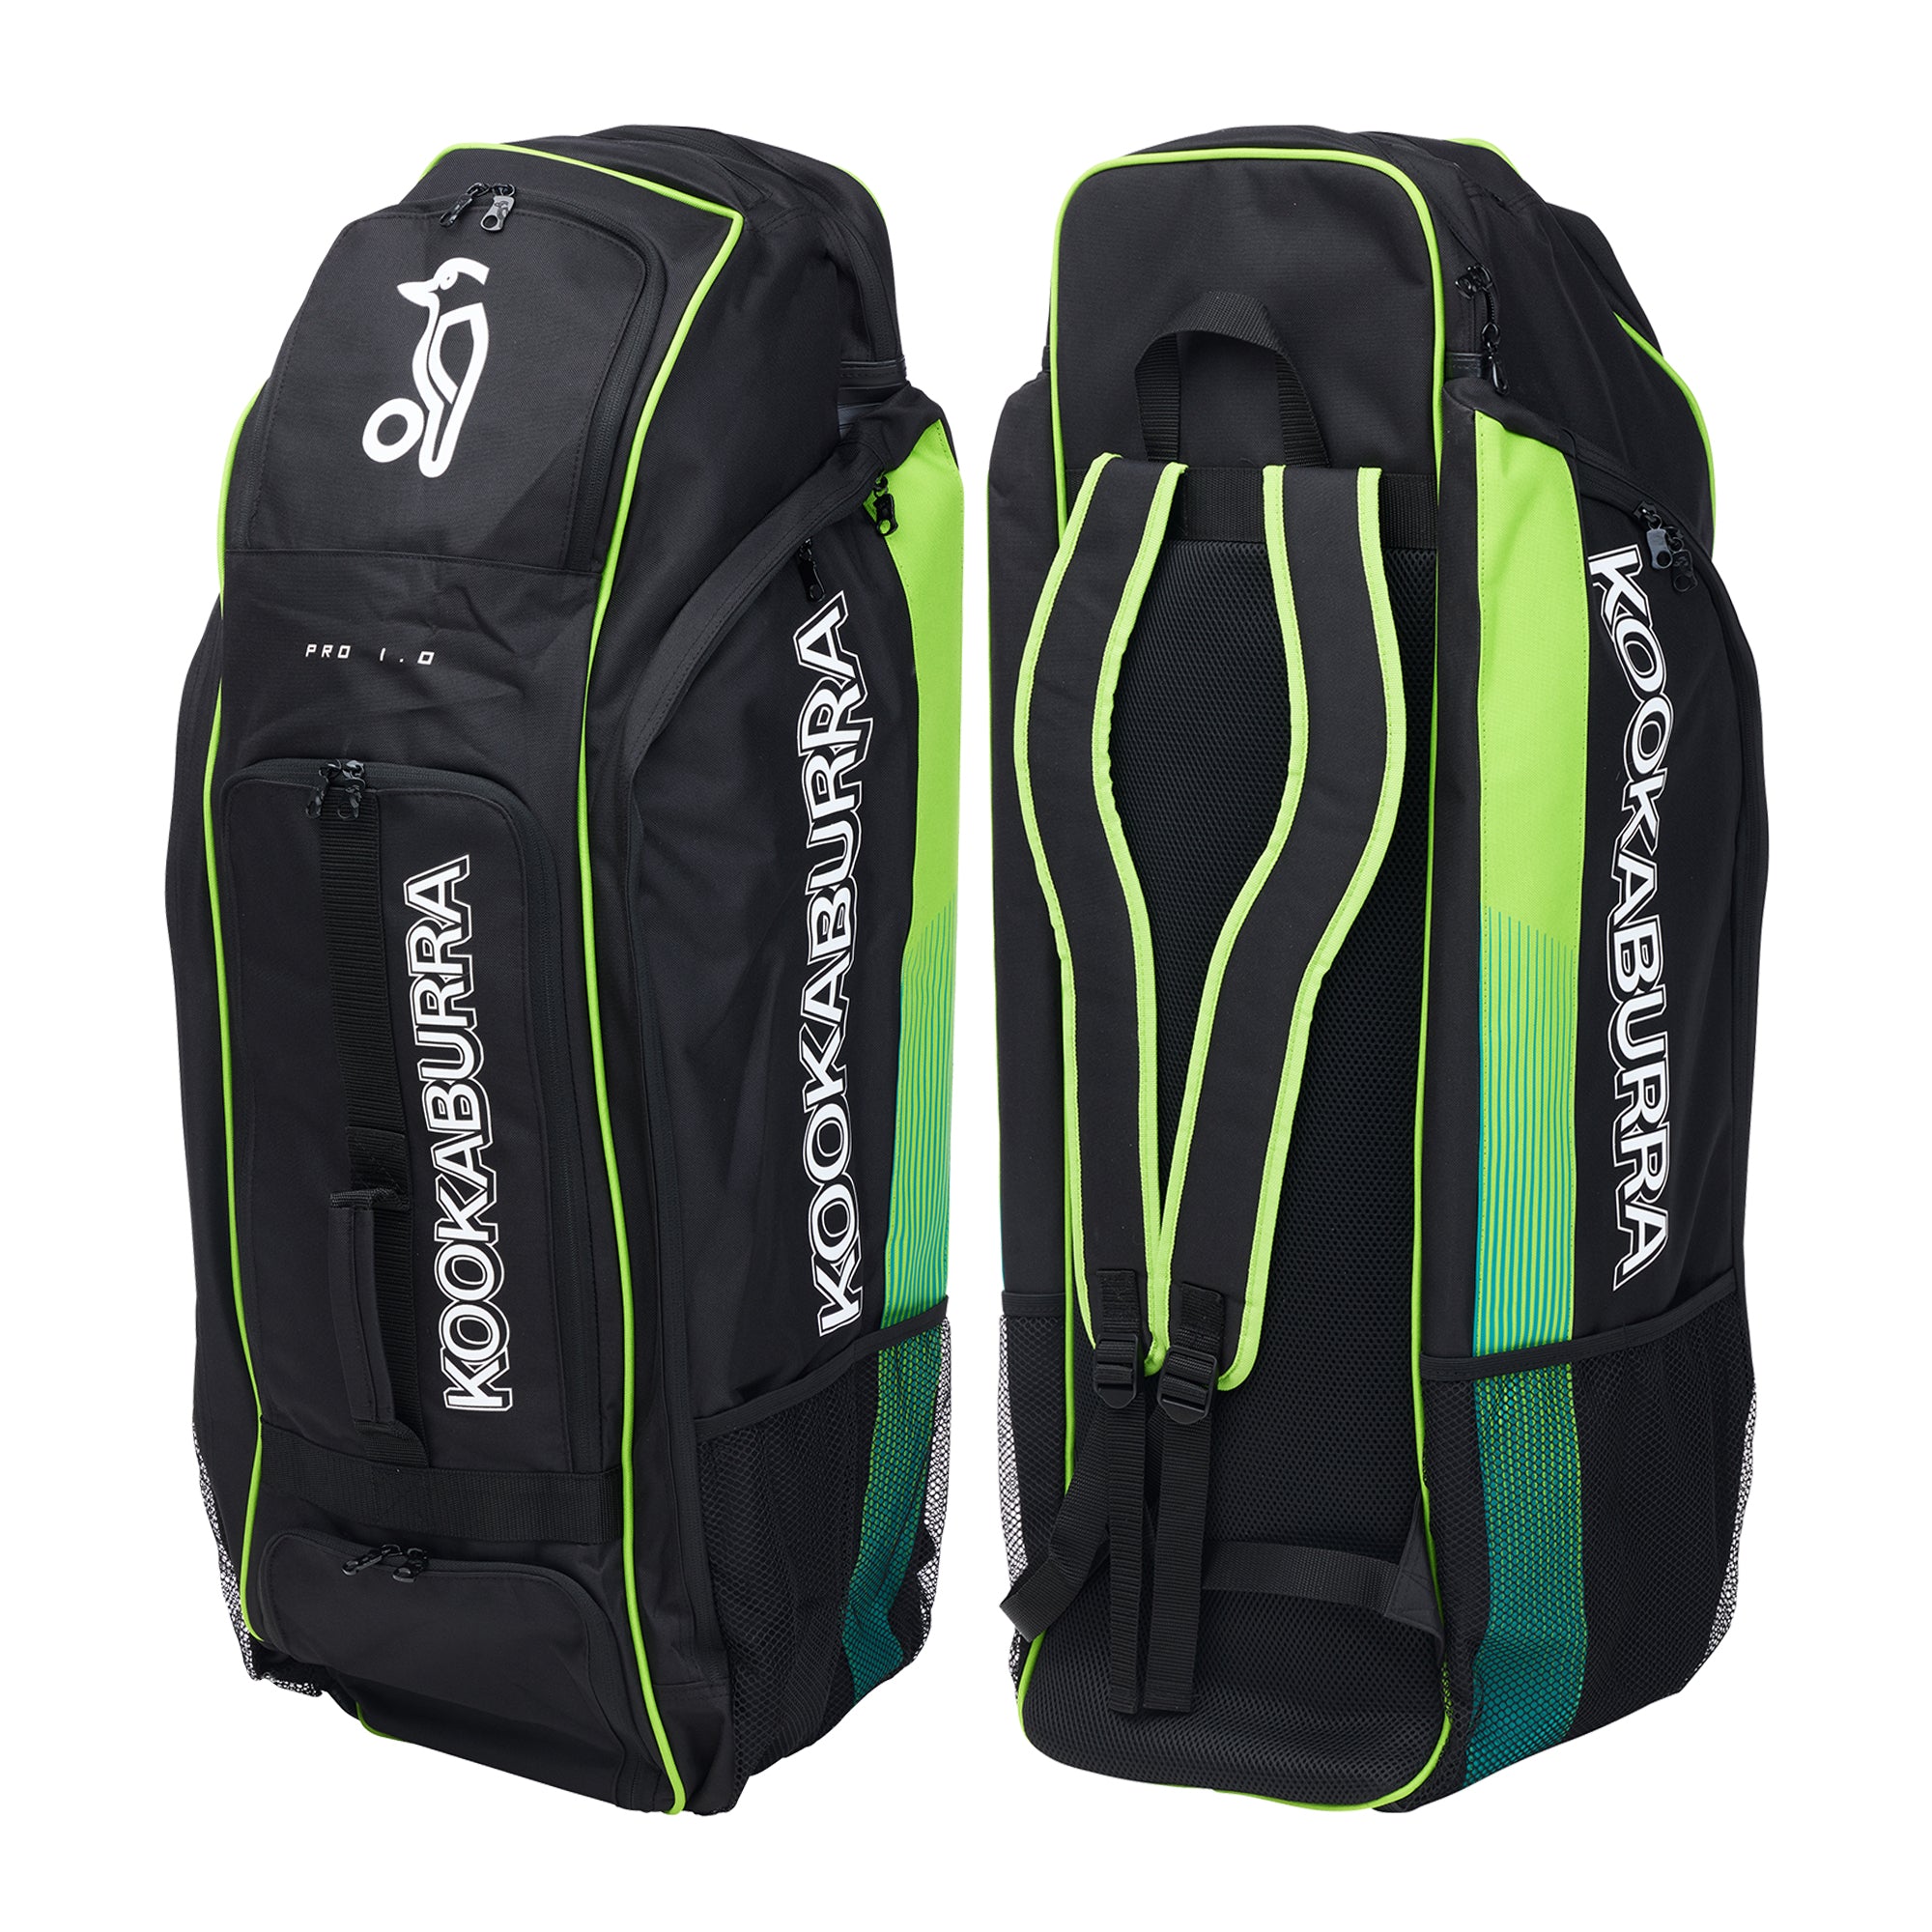 Kookaburra Pro 1.0 Duffle Cricket Kit Bag